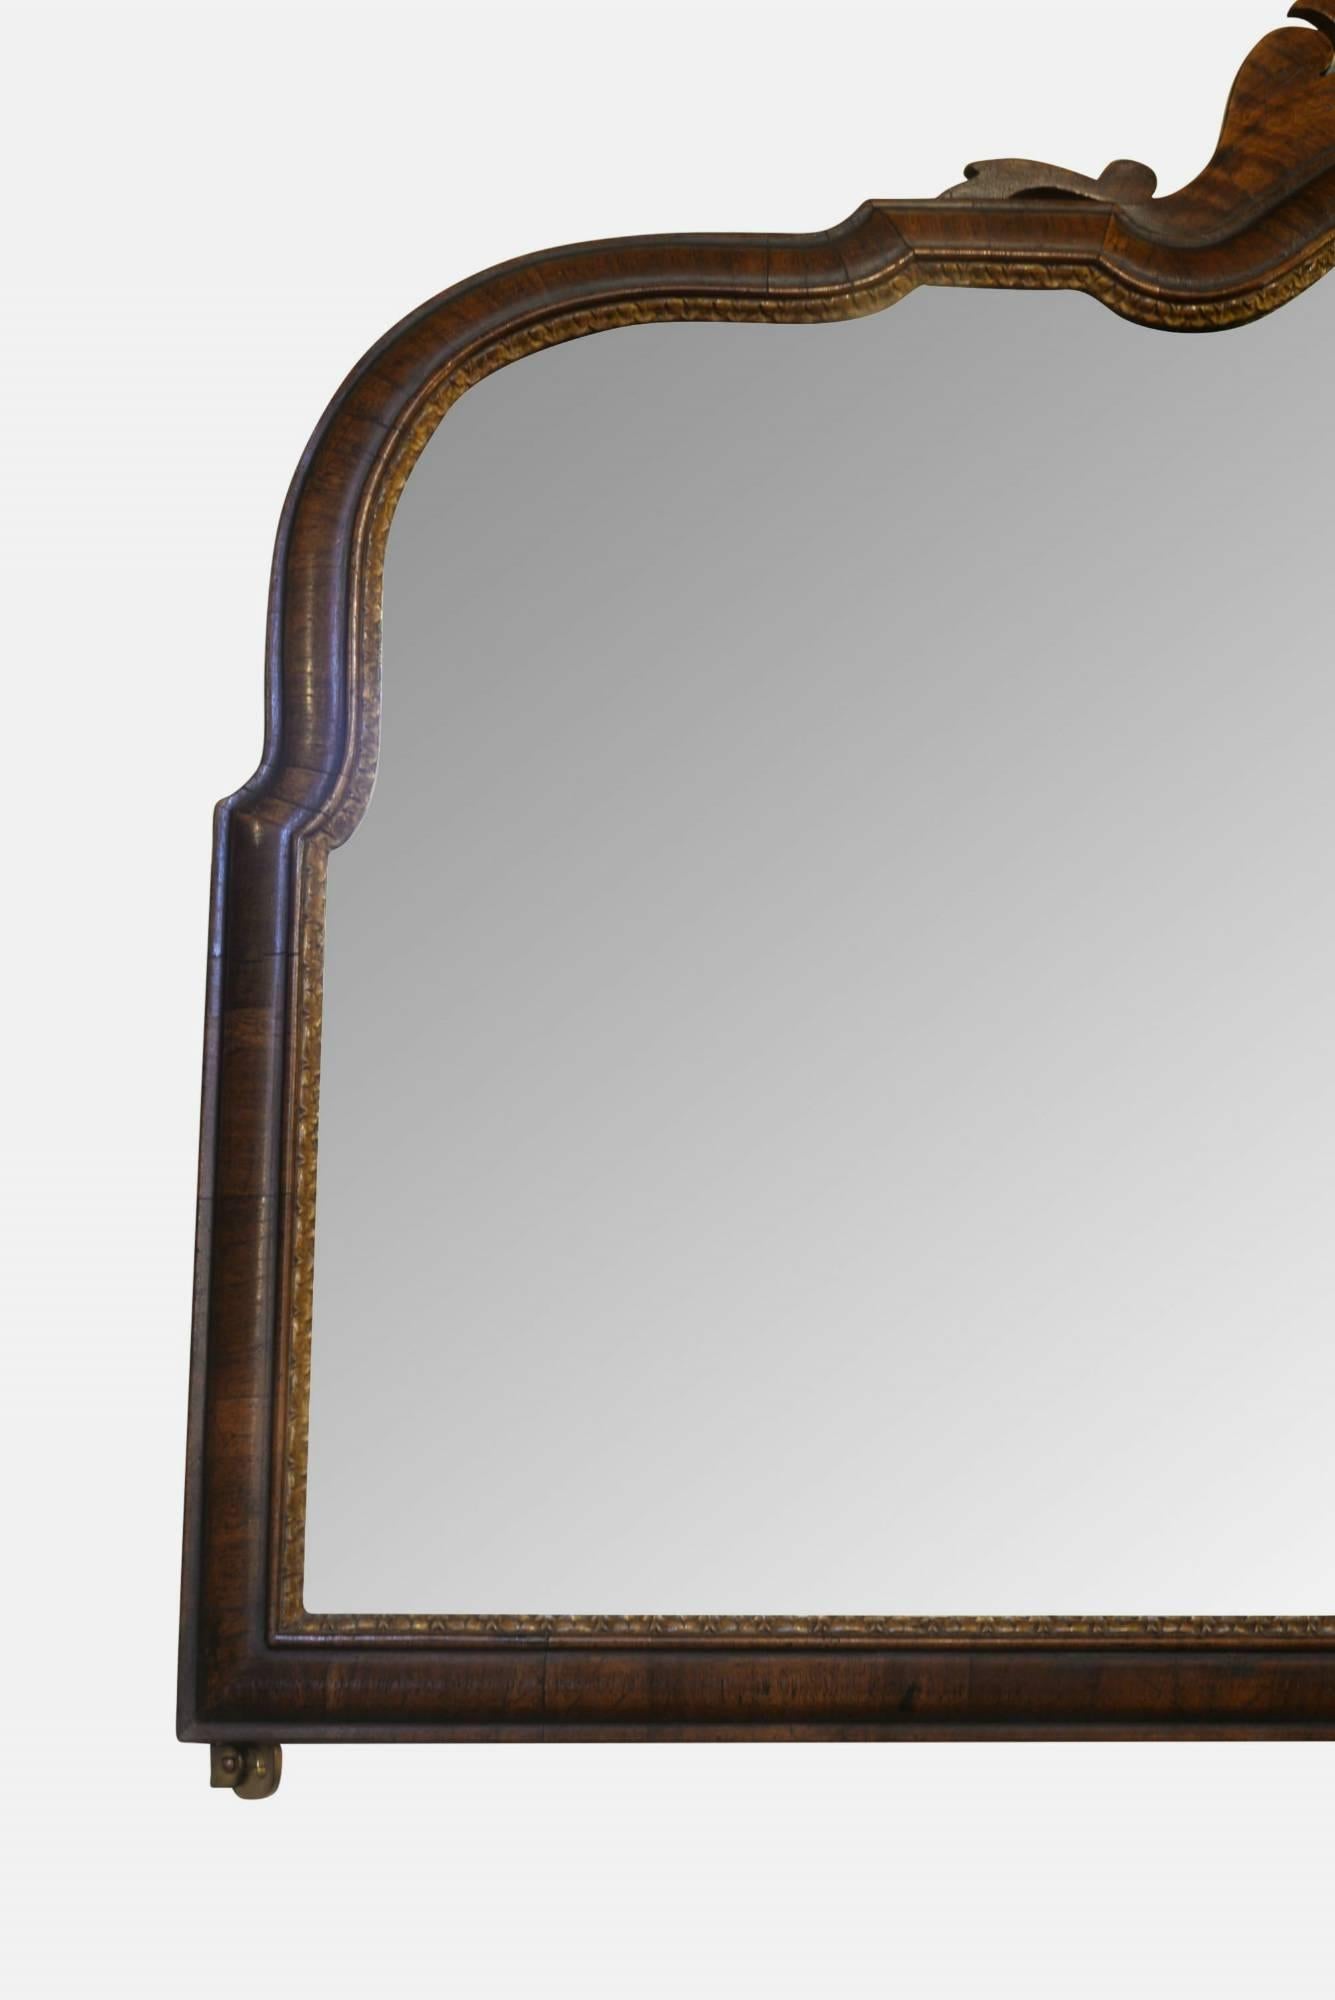 20th Century Walnut Framed Triple Plate Overmantel Mirror For Sale